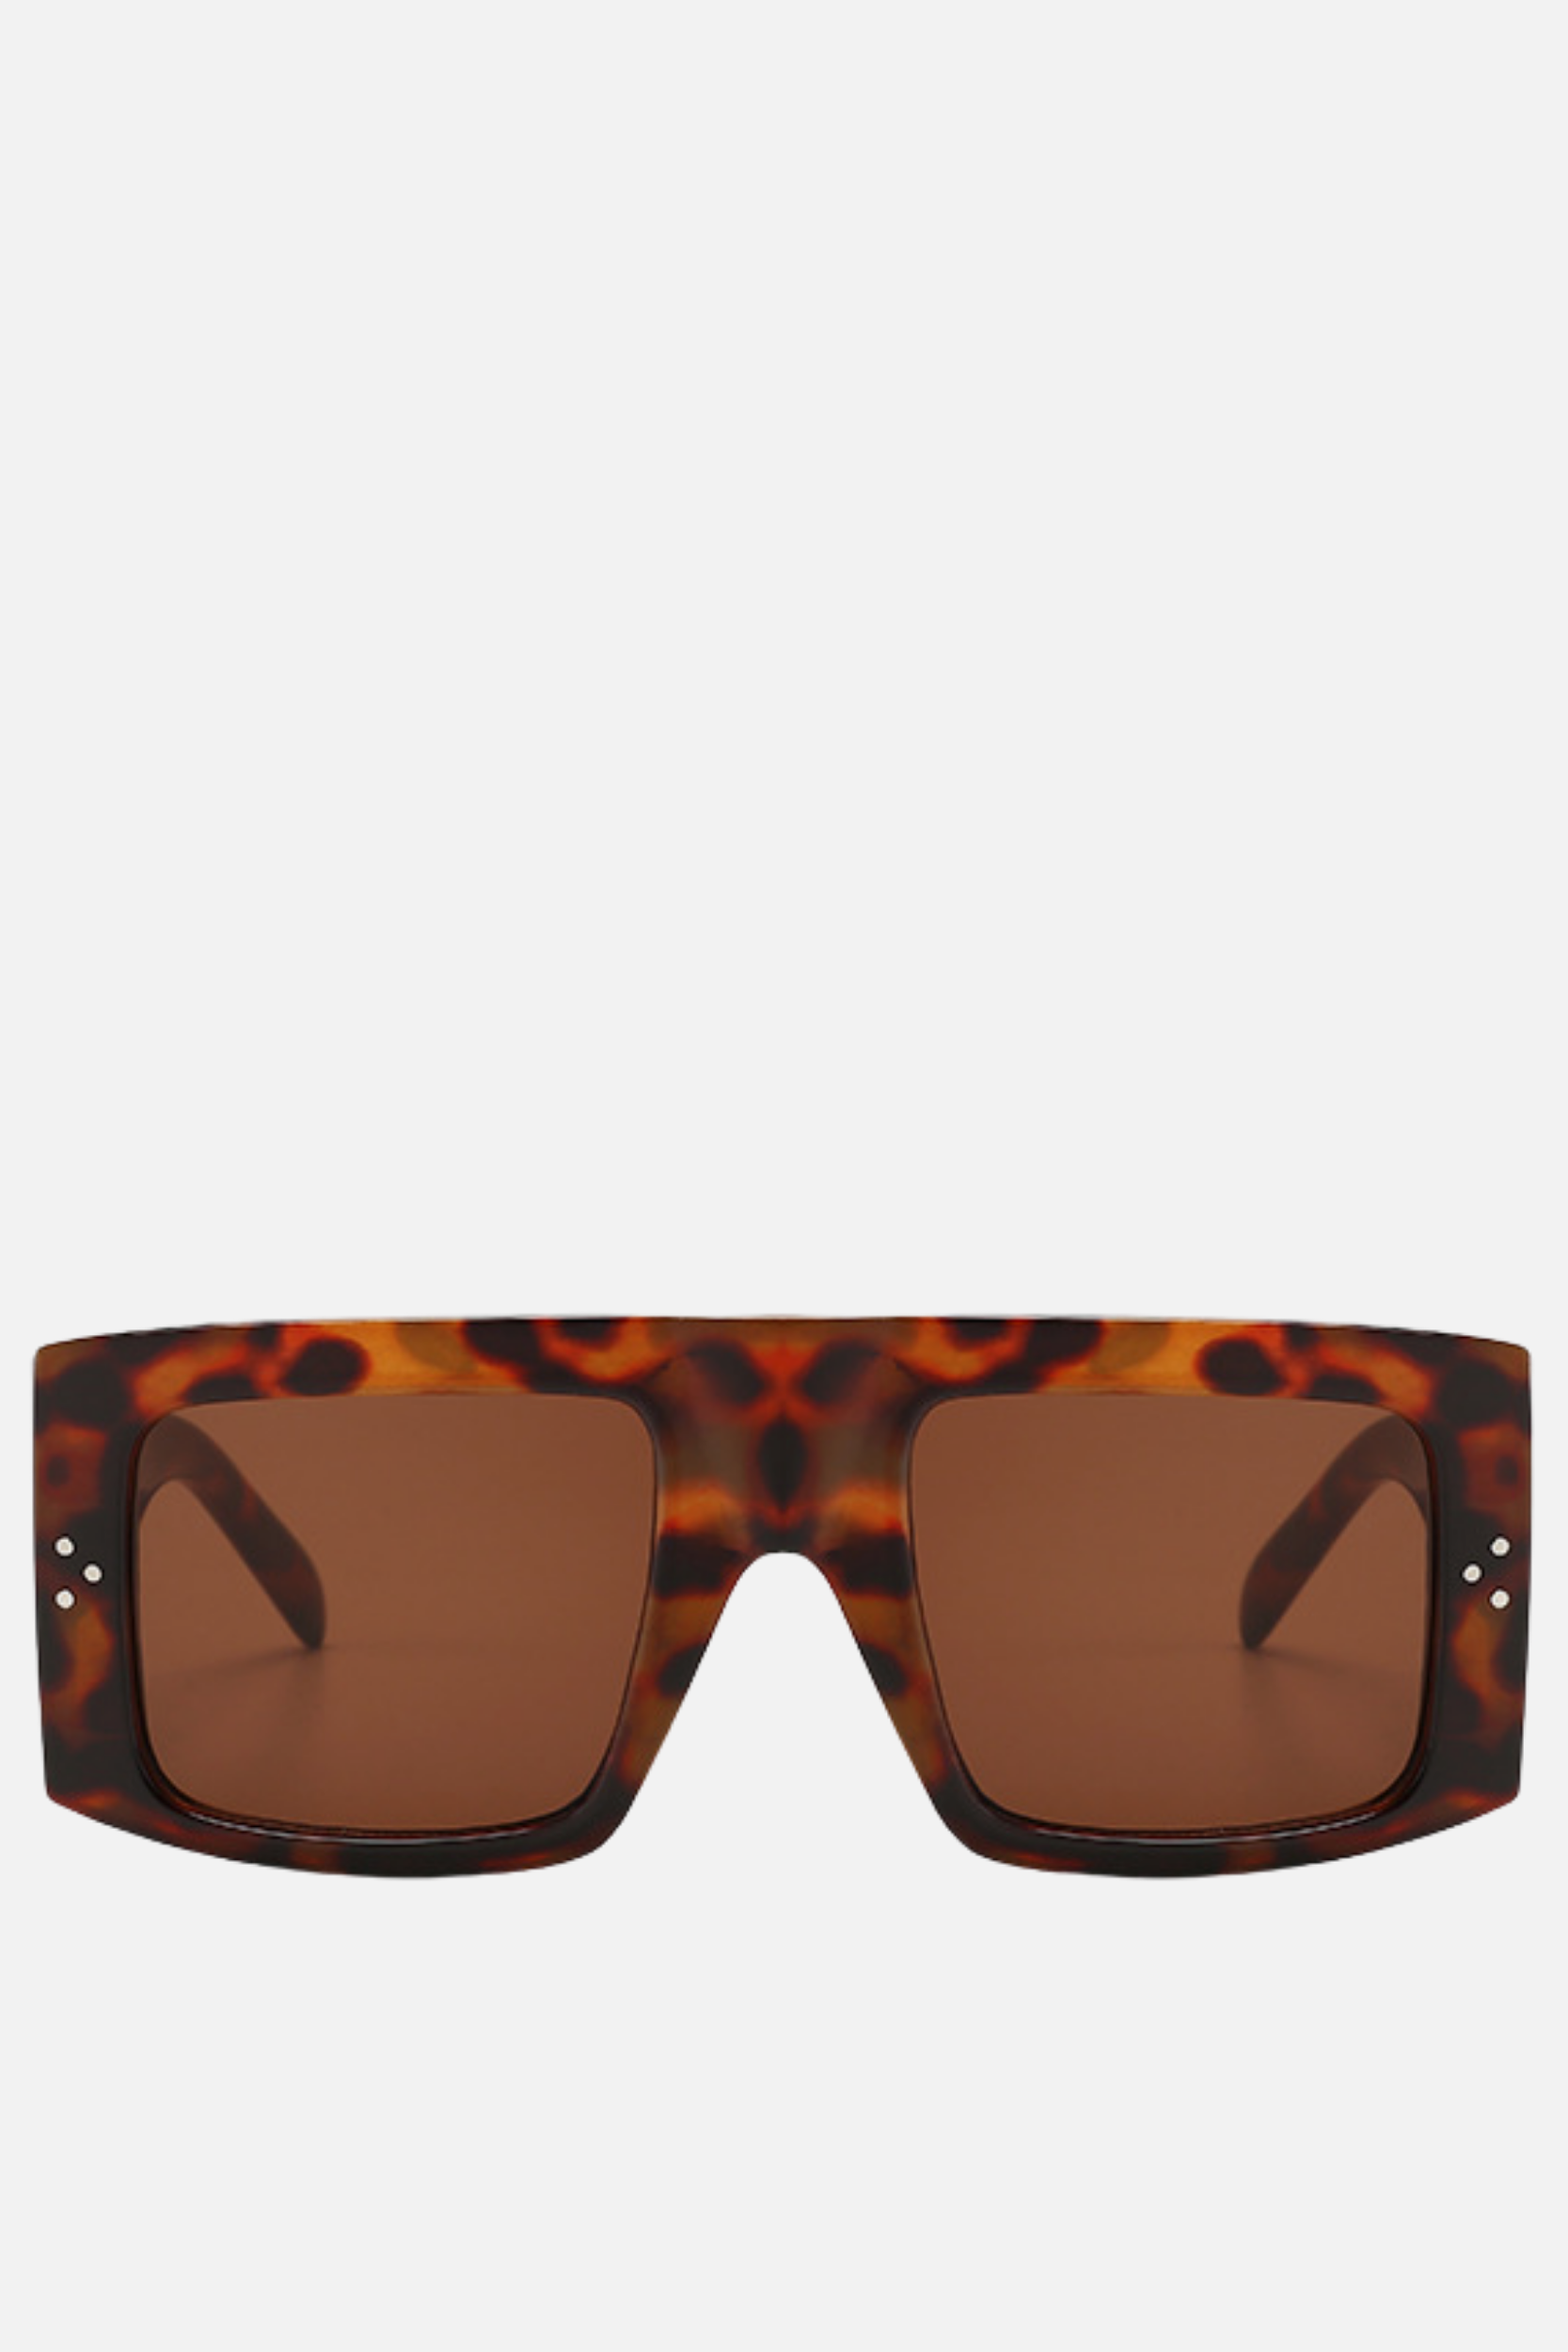 BOSTON Flat Top Leopard Sunglasses